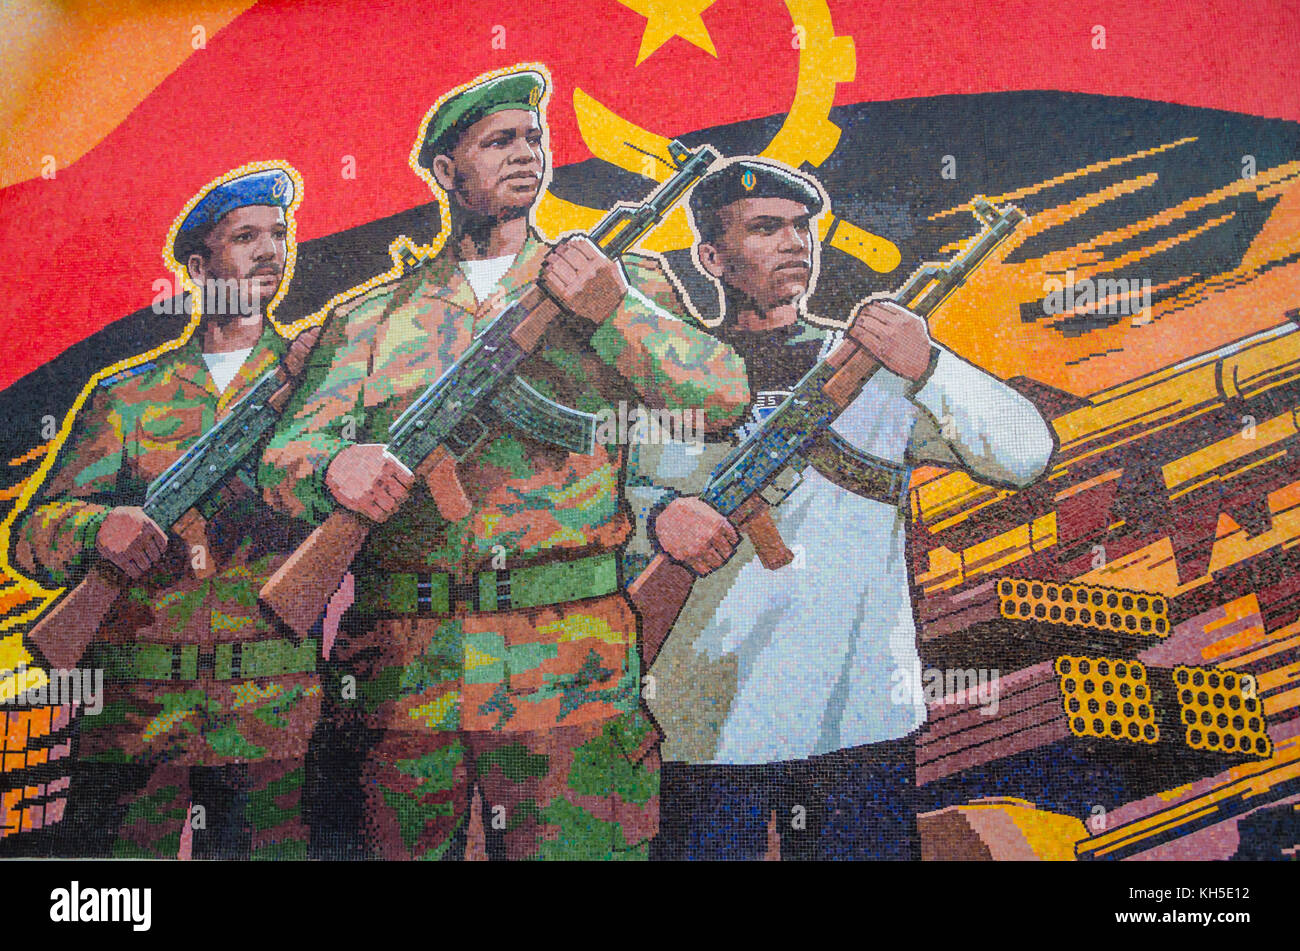 LUANDA, ANGOLA - APRIL 28 2014: Civil war memorial depicting Angolan flag and soldiers at Fortaleza de Sao Miguel Stock Photo